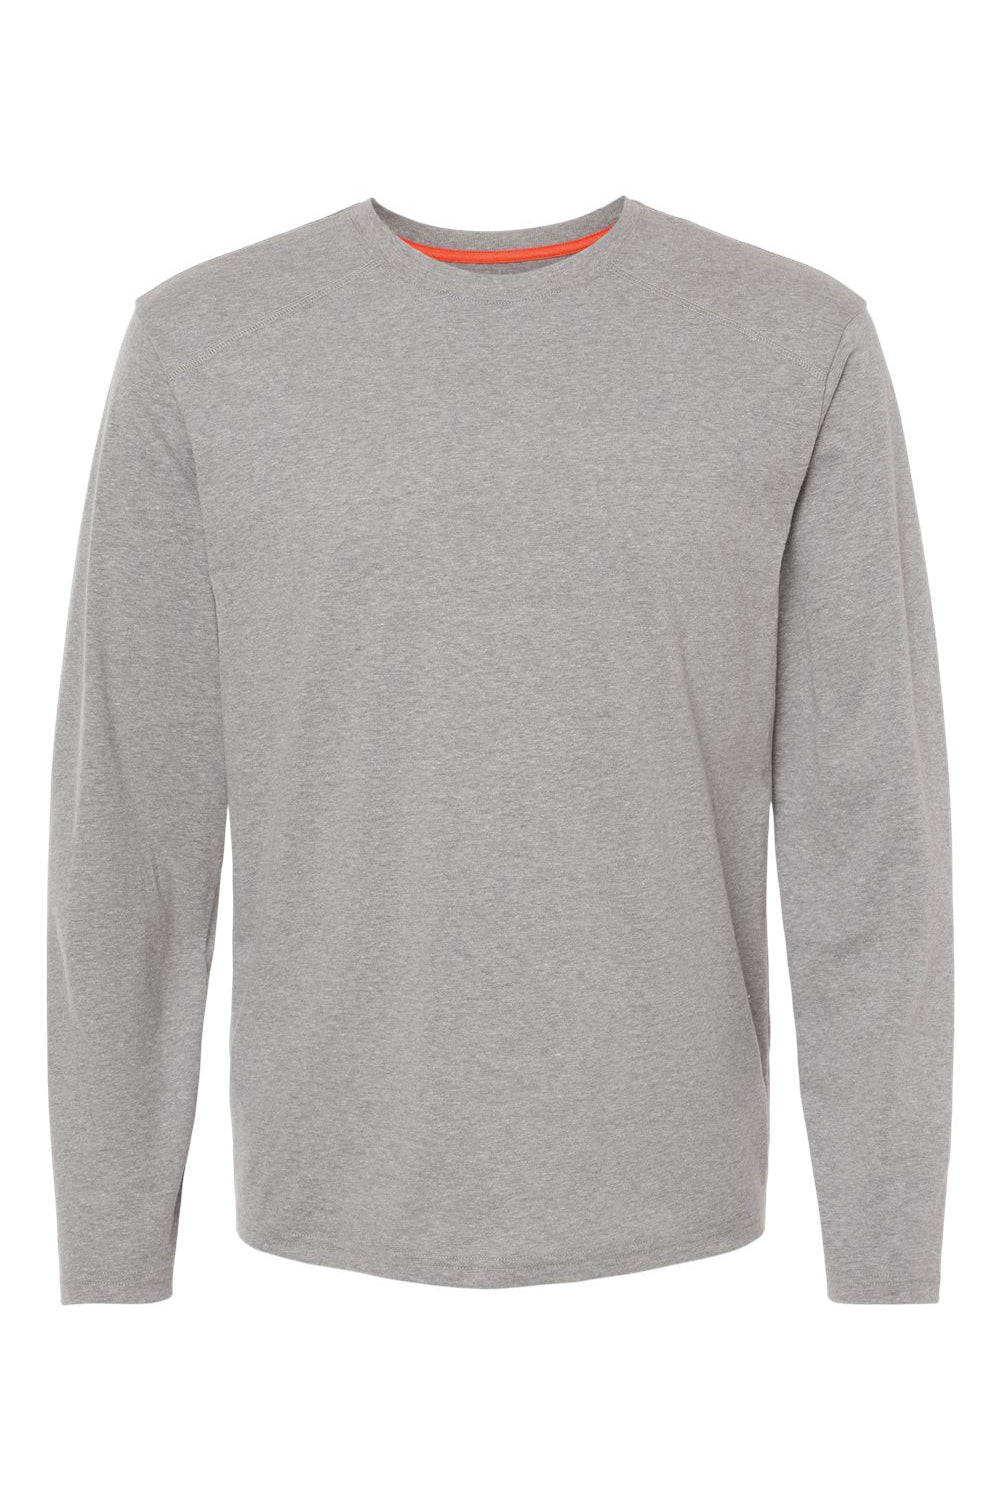 Kastlfel 2016 Mens RecycledSoft Long Sleeve Crewneck T-Shirt Steel Grey Flat Front